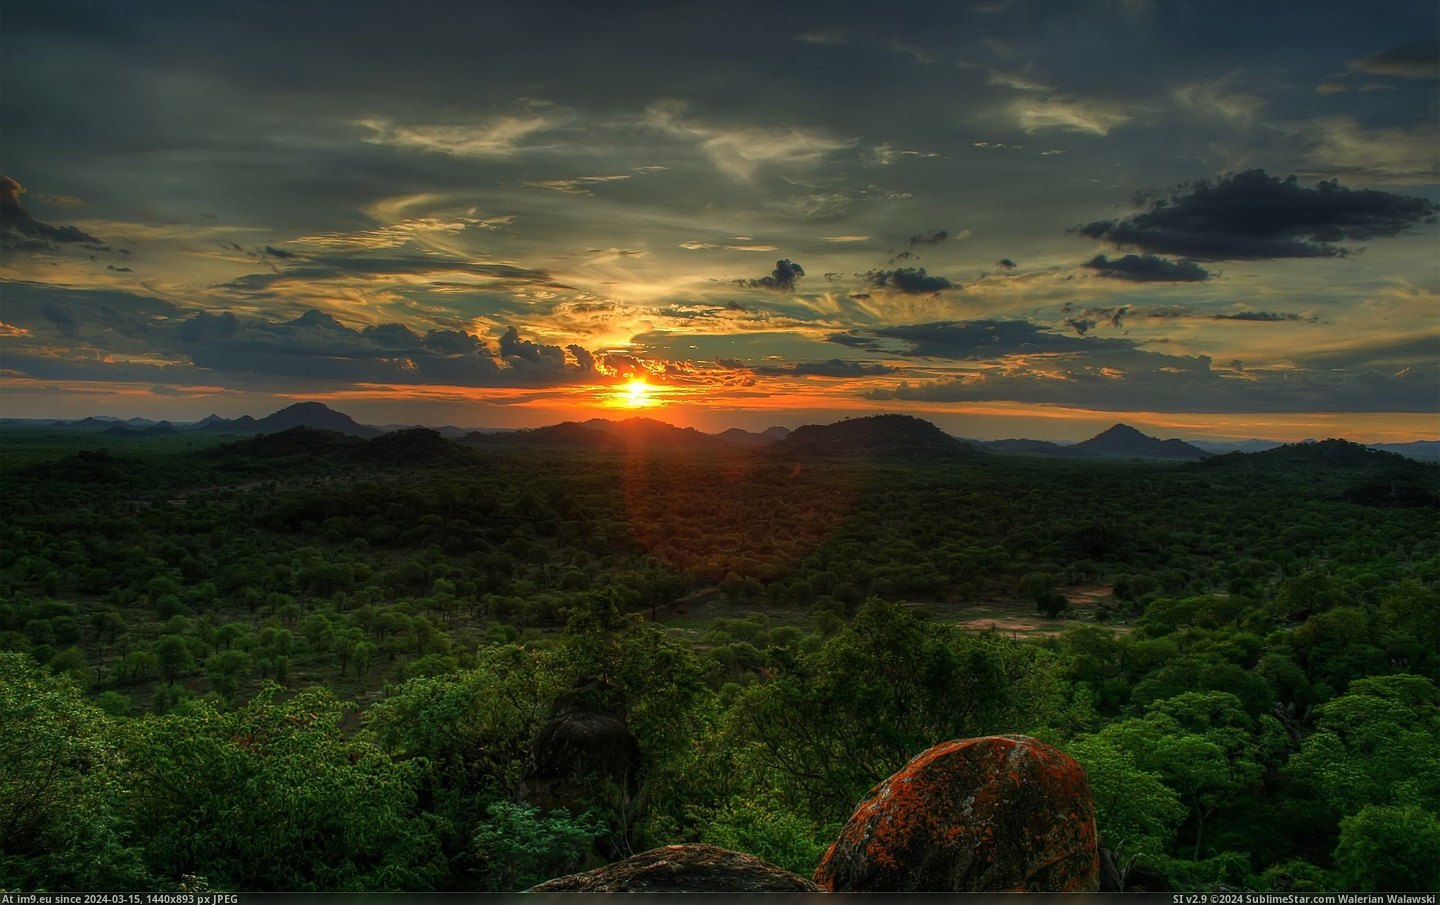 #Sunset #2560x1600 #Zimbabwe #African [Earthporn] African Sunset, Zimbabwe [2560x1600] Pic. (Bild von album My r/EARTHPORN favs))